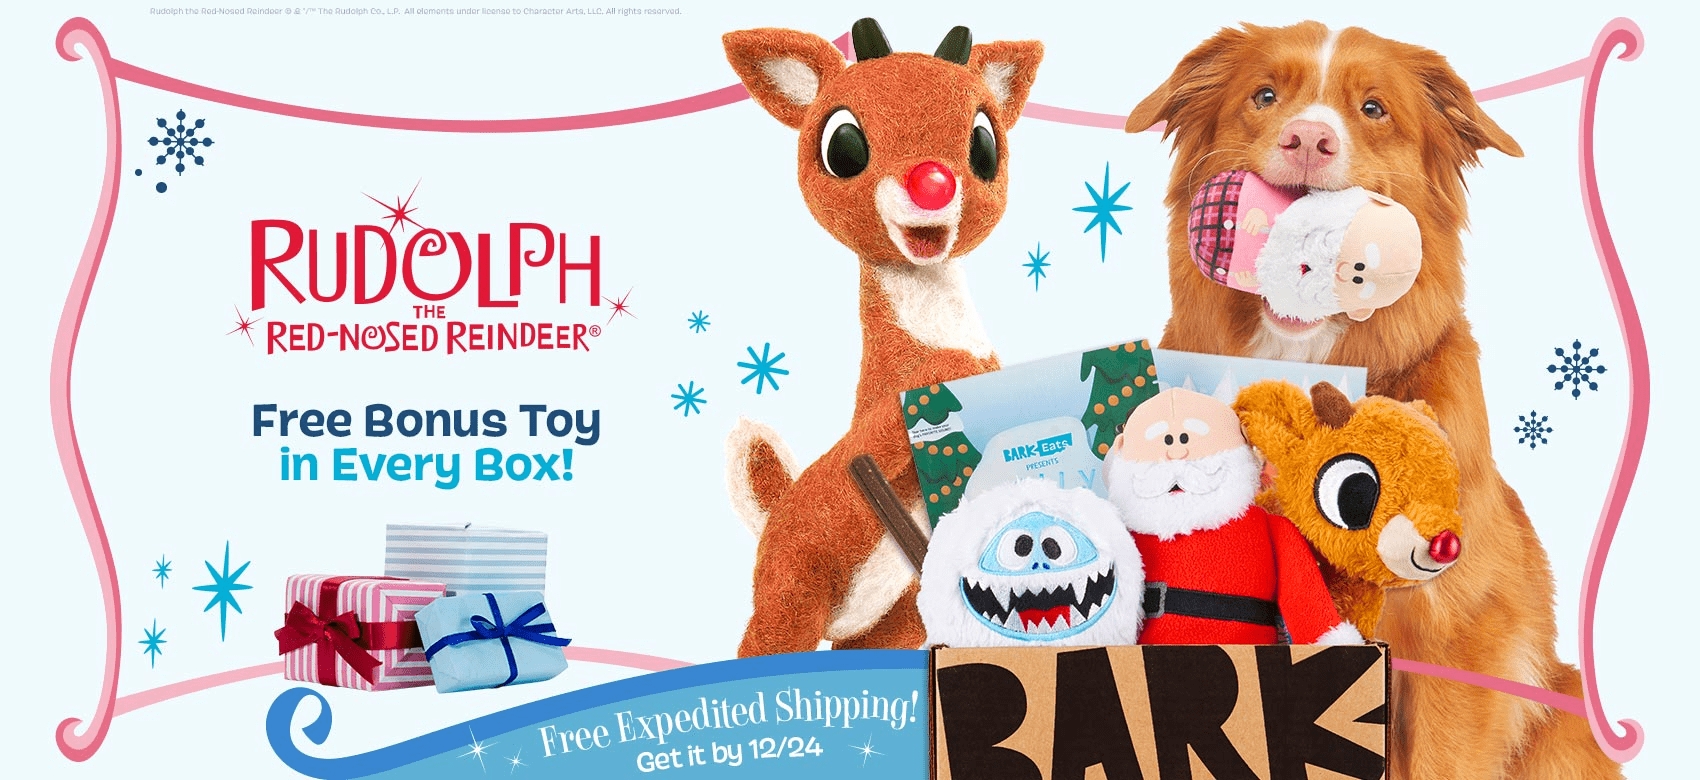 BarkBox Coupon Code: Free Bonus Toy in Every Box!